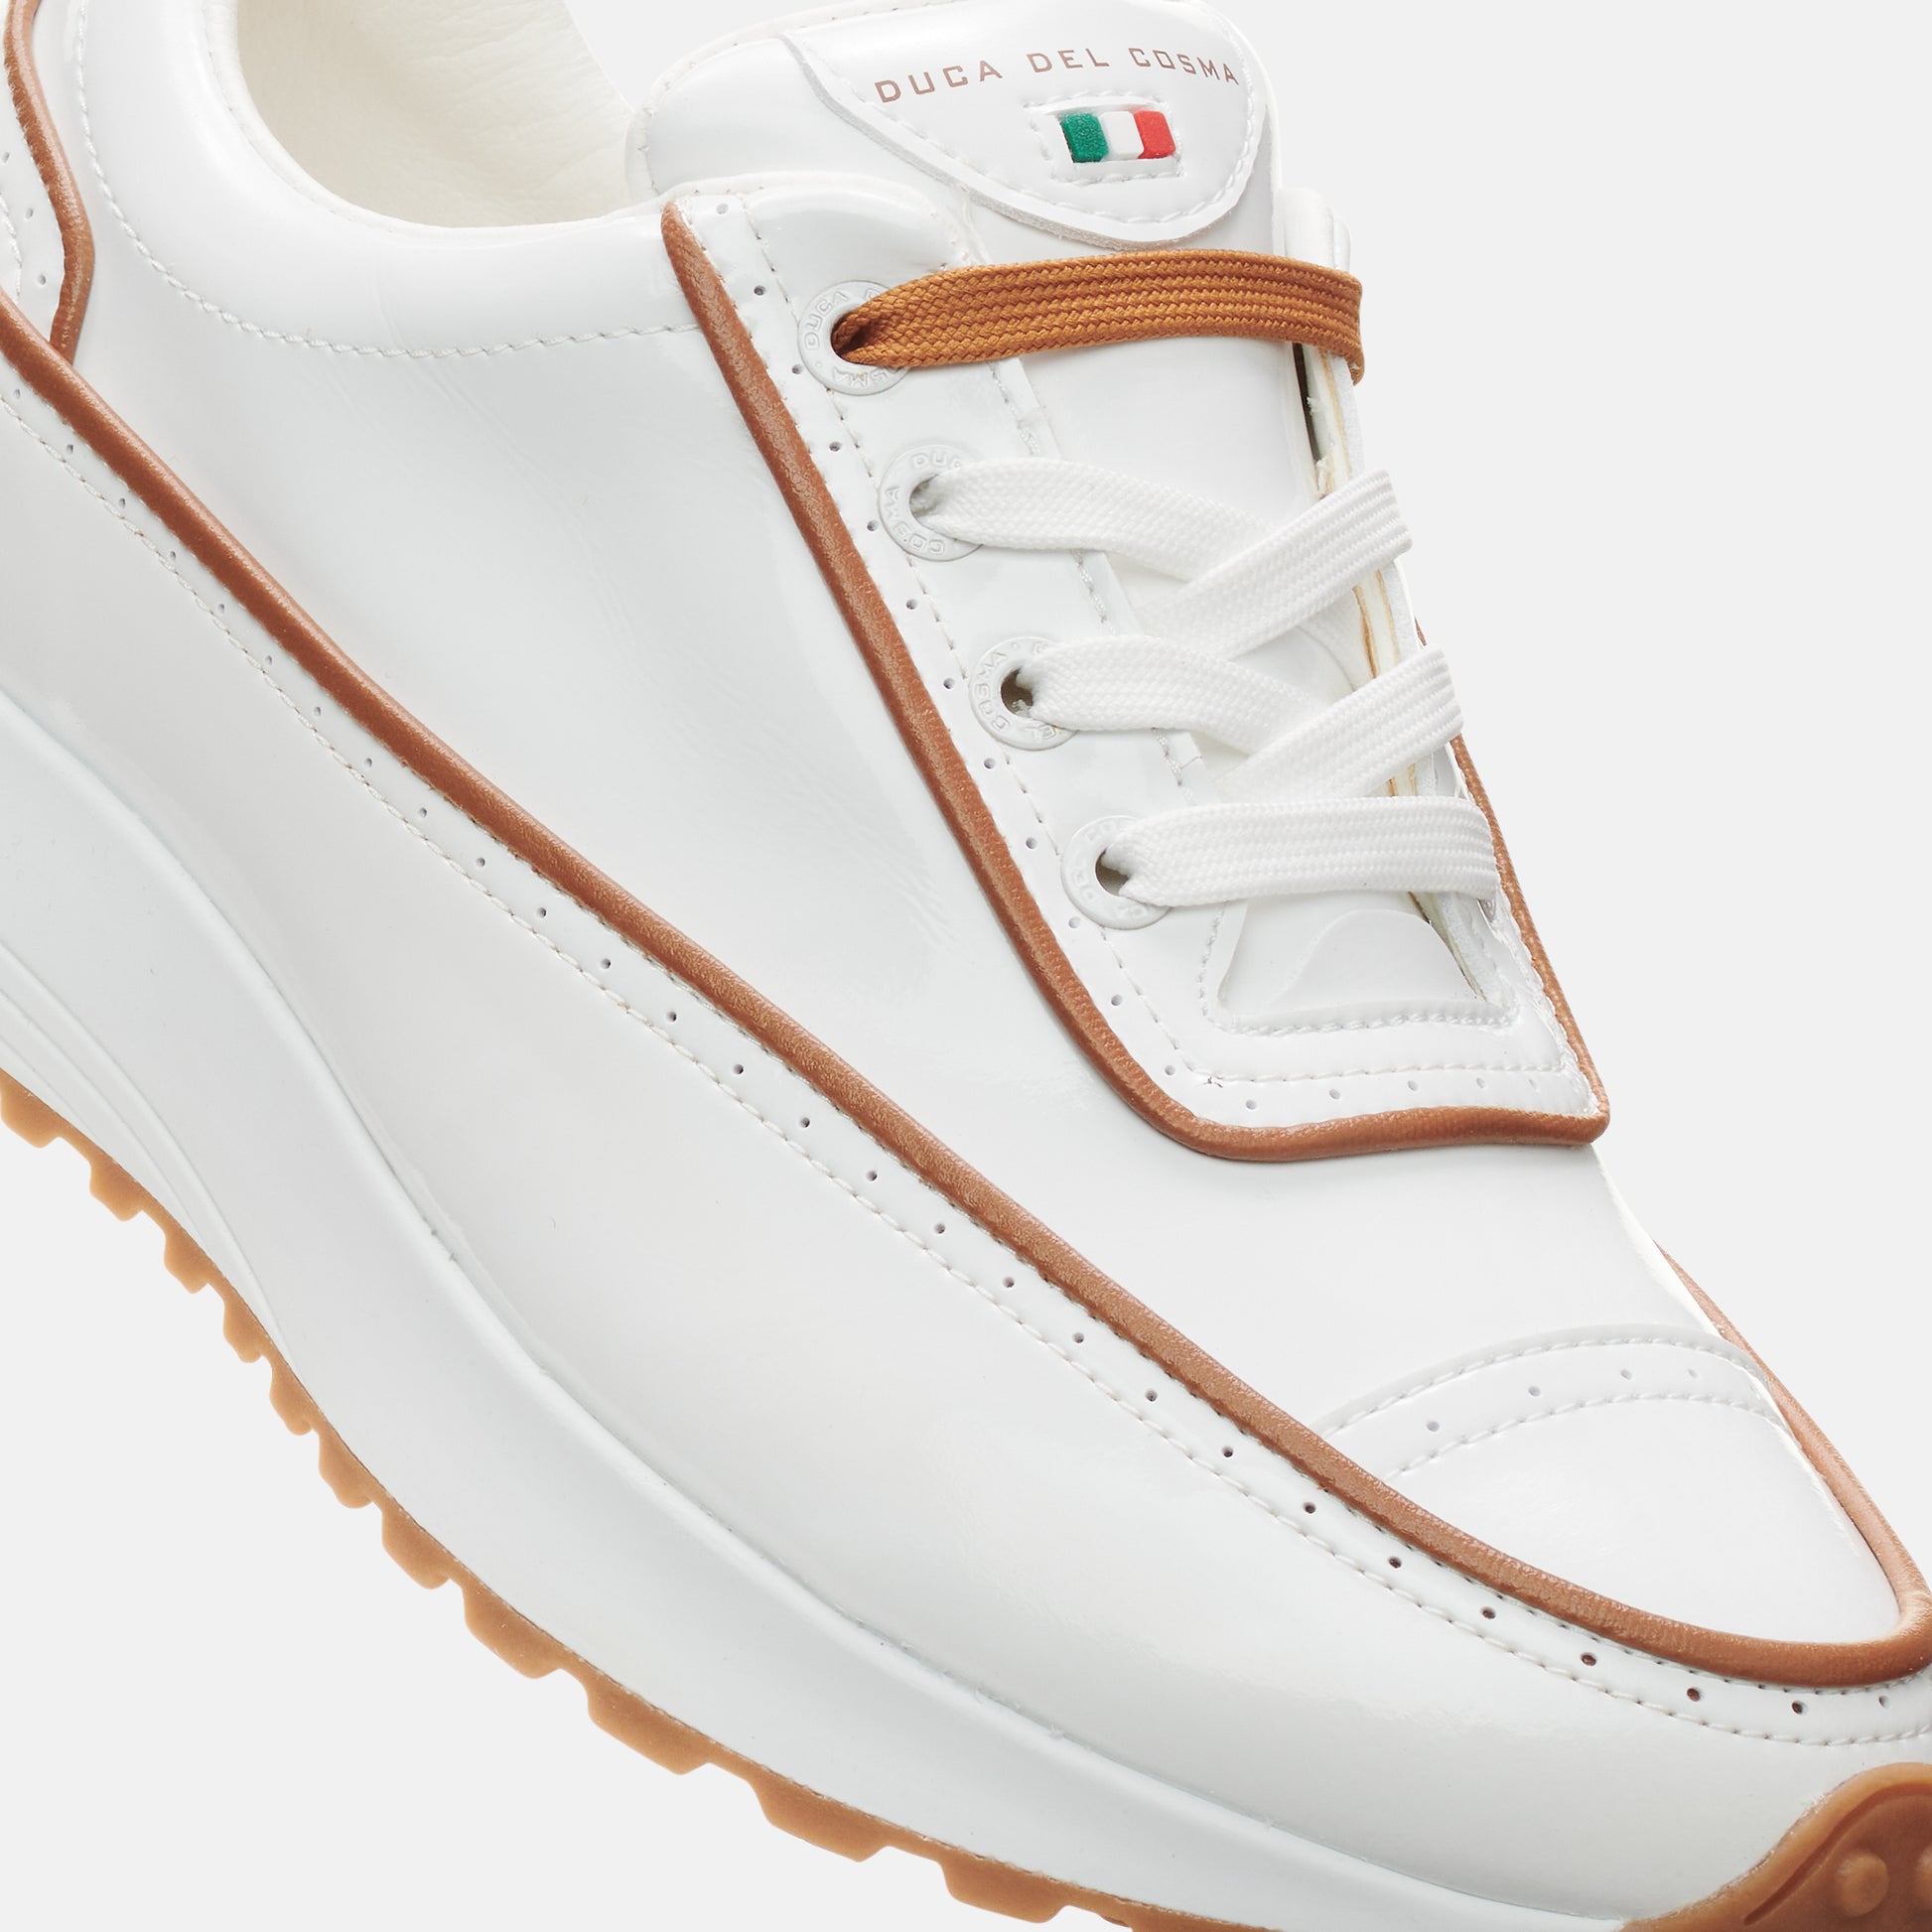 Alexa - white Women's Golf Shoes Duca del Cosma Waterproof best golf shoe for the golf course